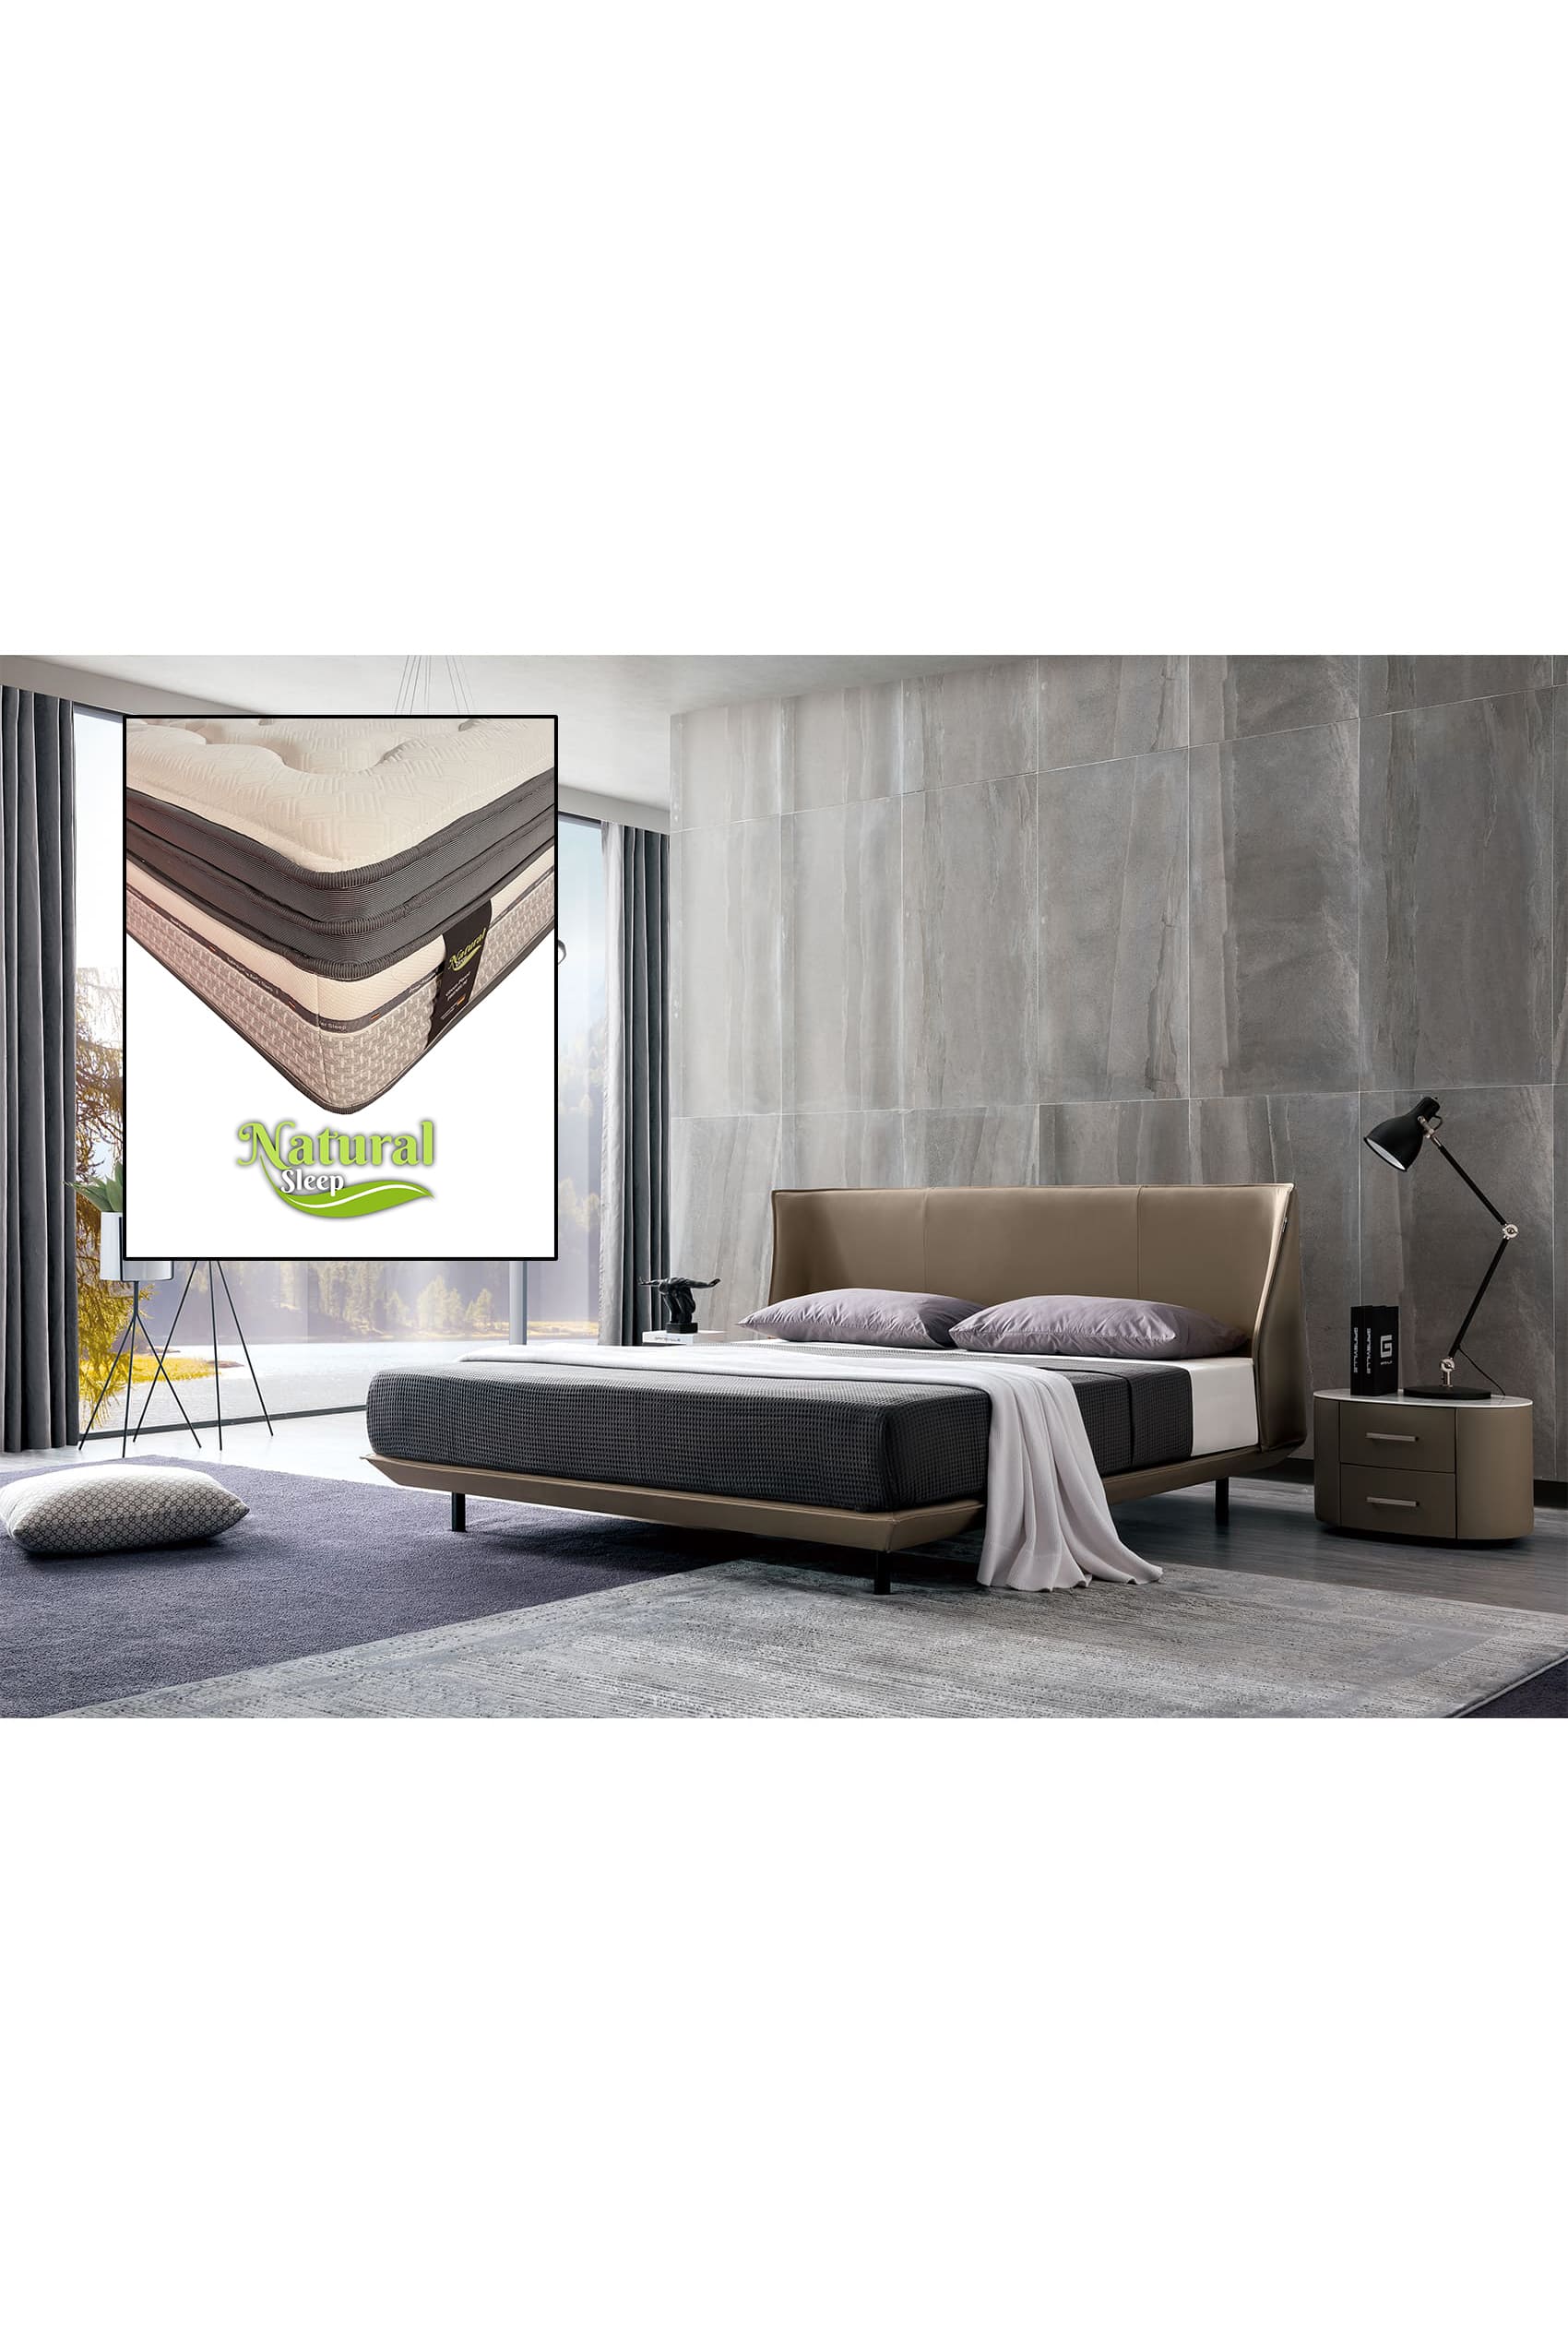 Zolano Designer Bed Frame + Natural Sleep Green Forest